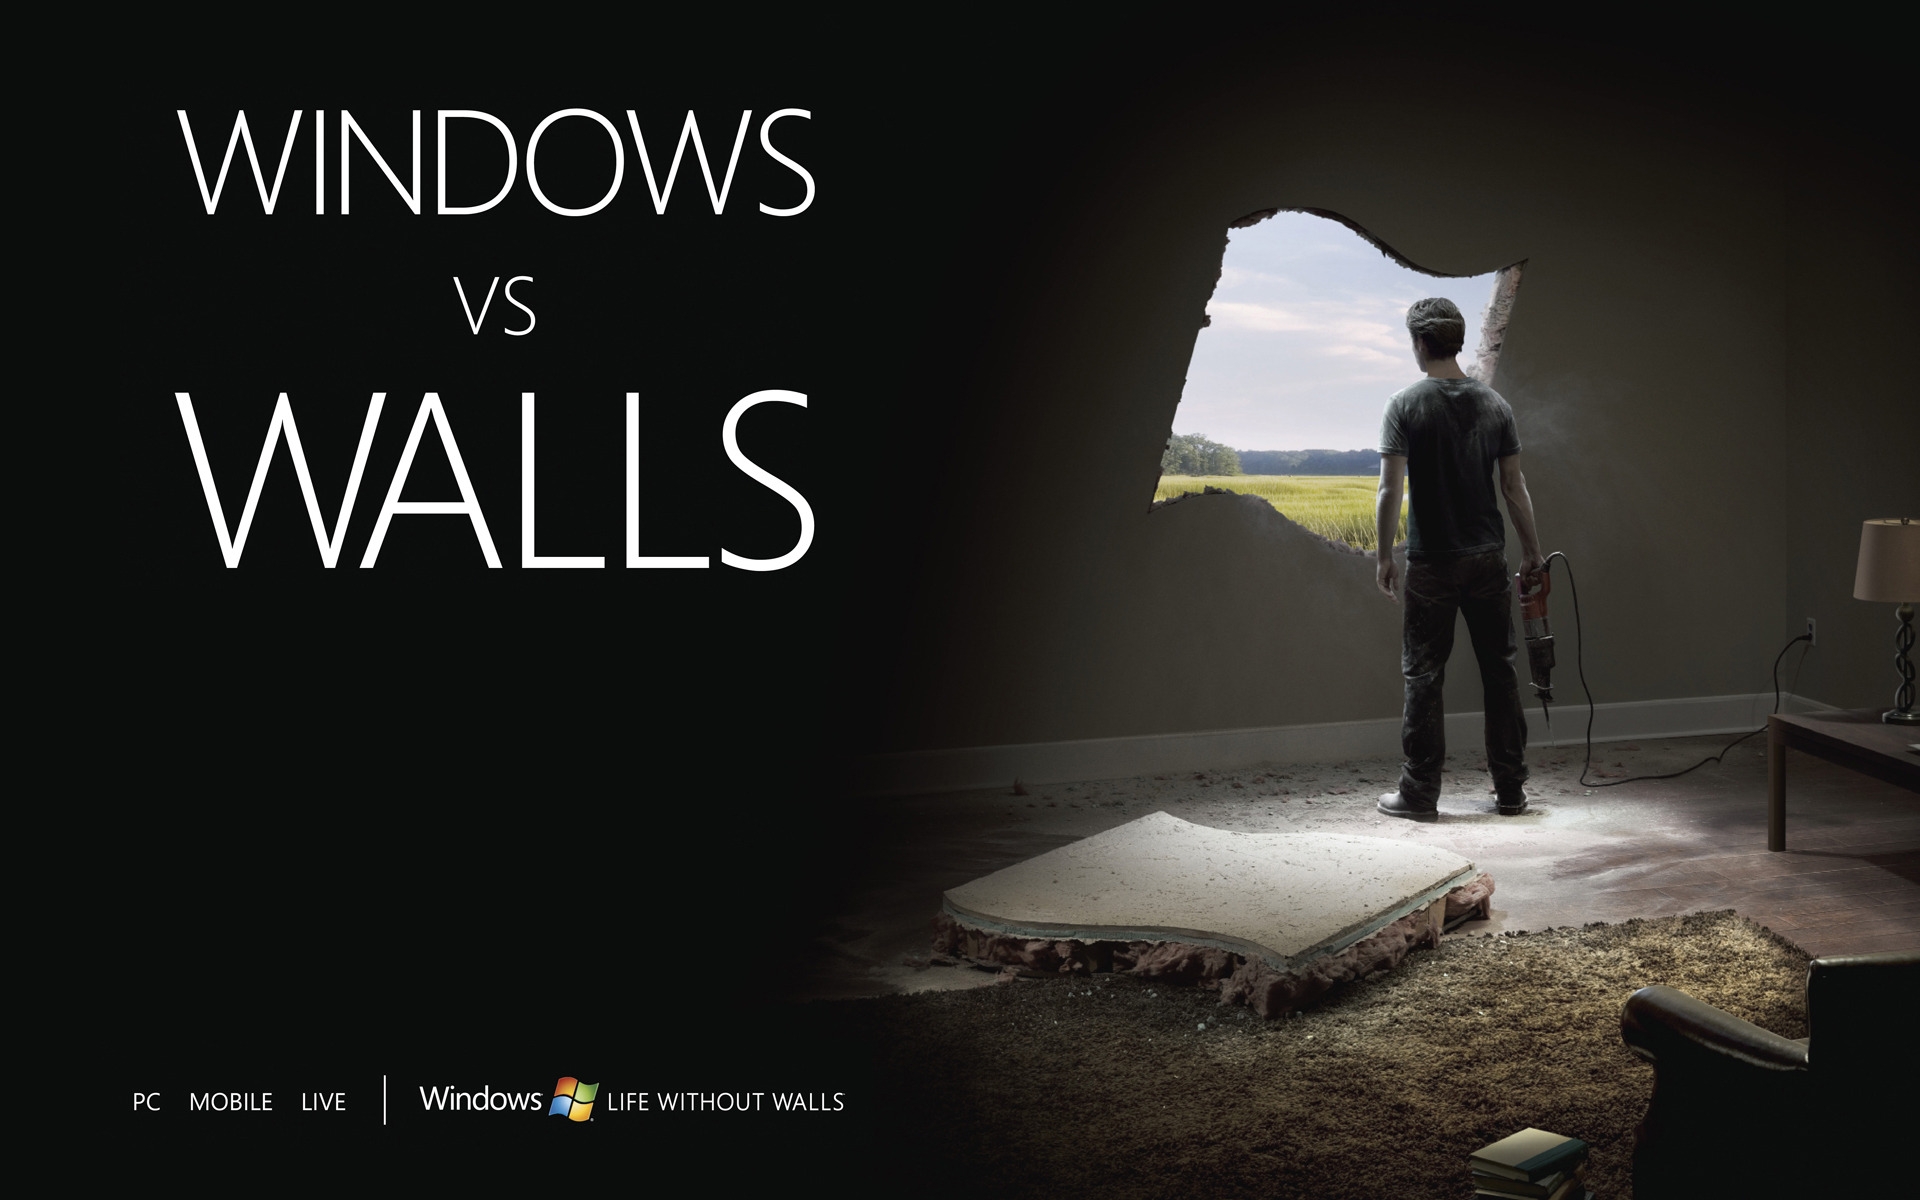 Windows vs Walls for 1920 x 1200 widescreen resolution